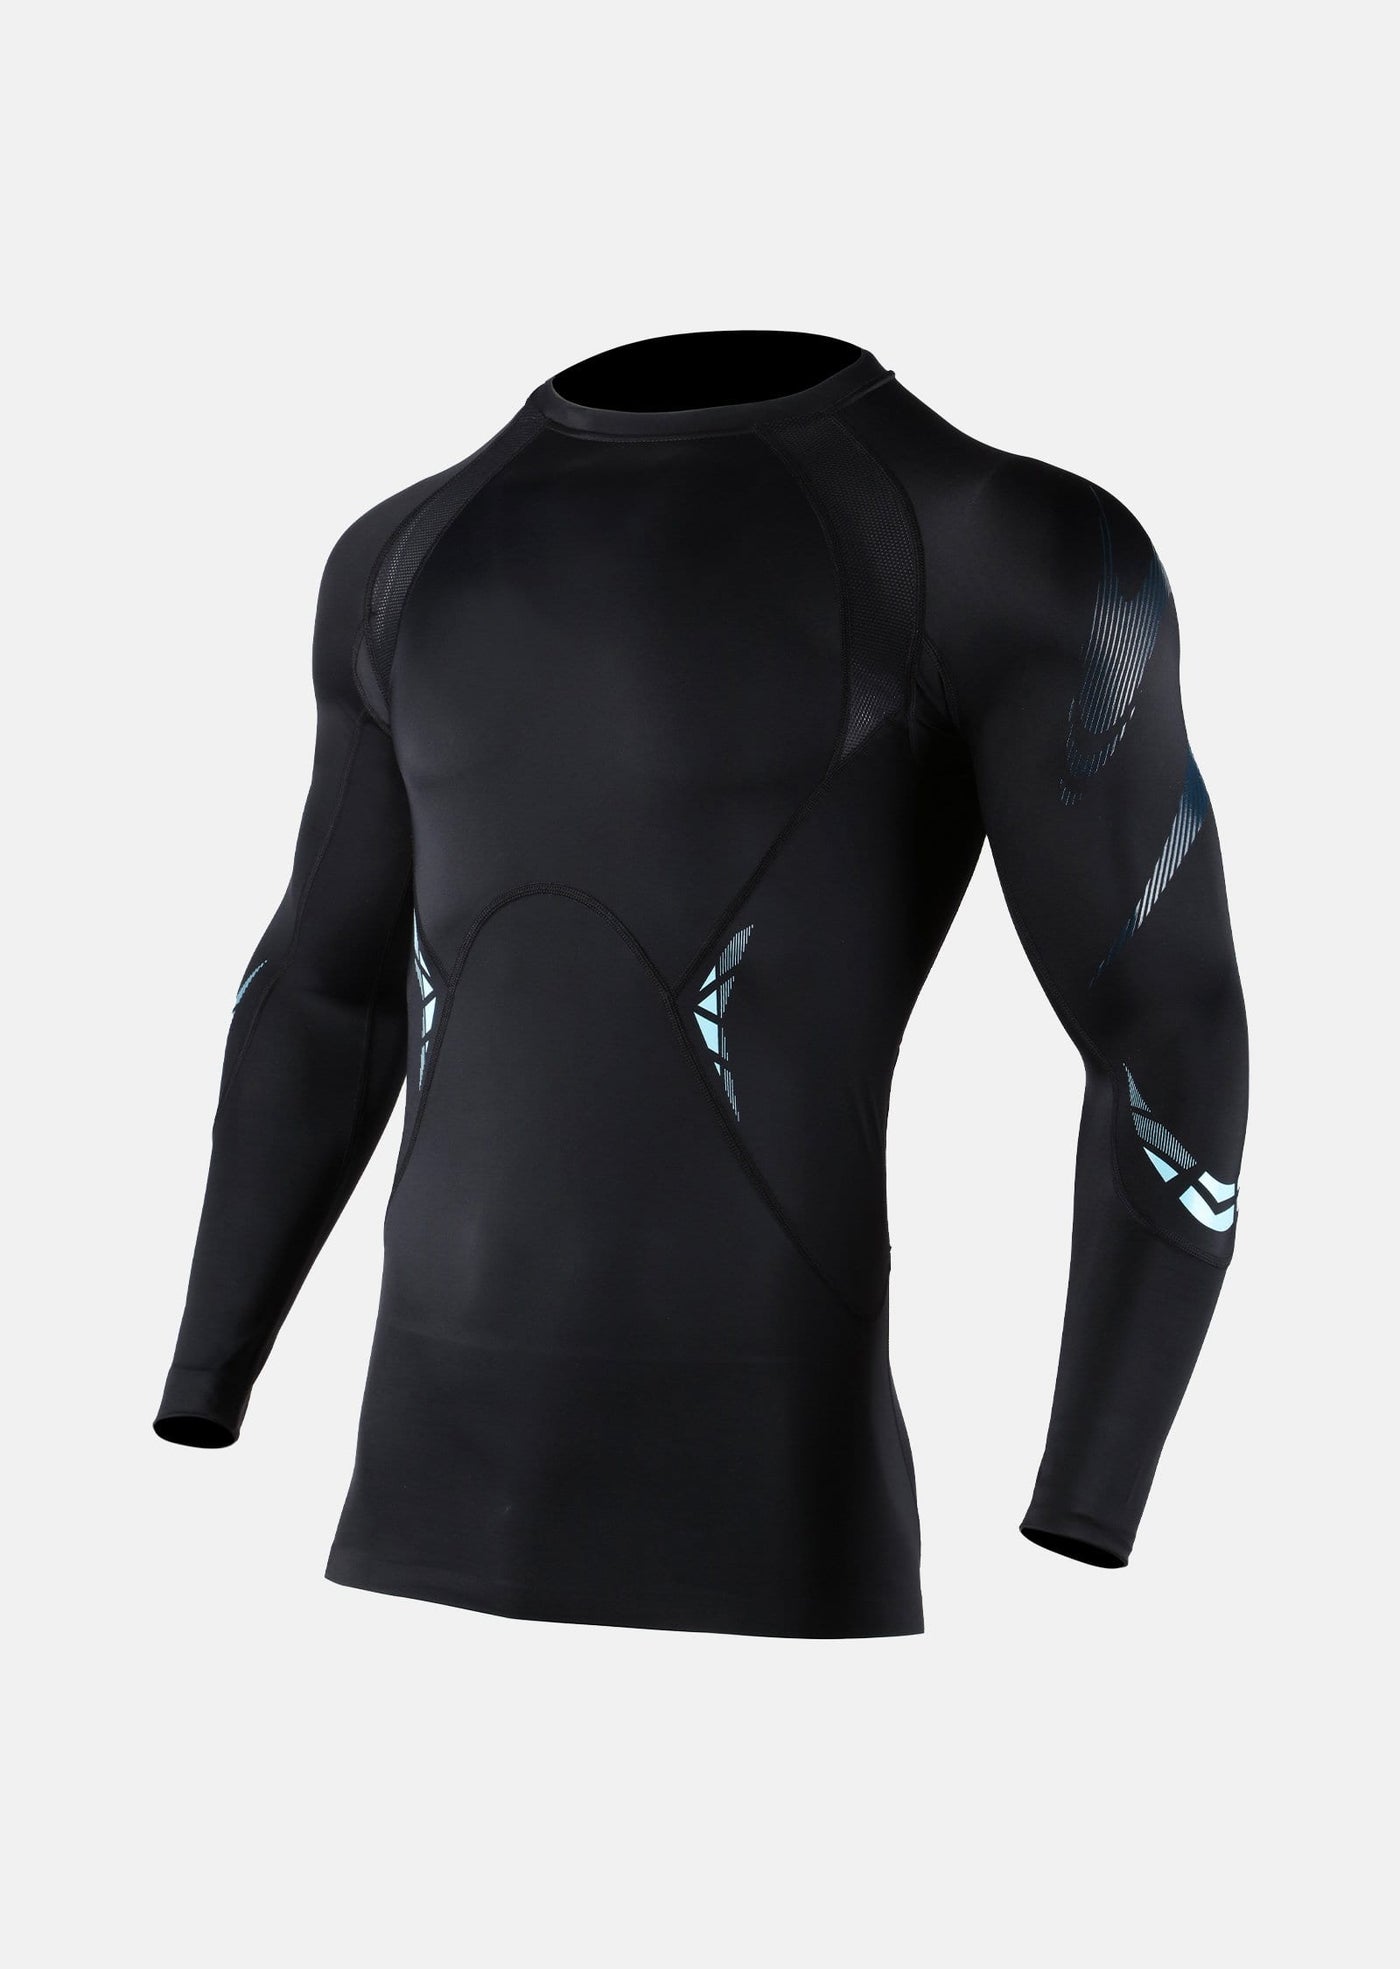 genstand Arne Alligevel Men's Compression Top | Black & Quick Dry & Workout Shirts - SUMARPO